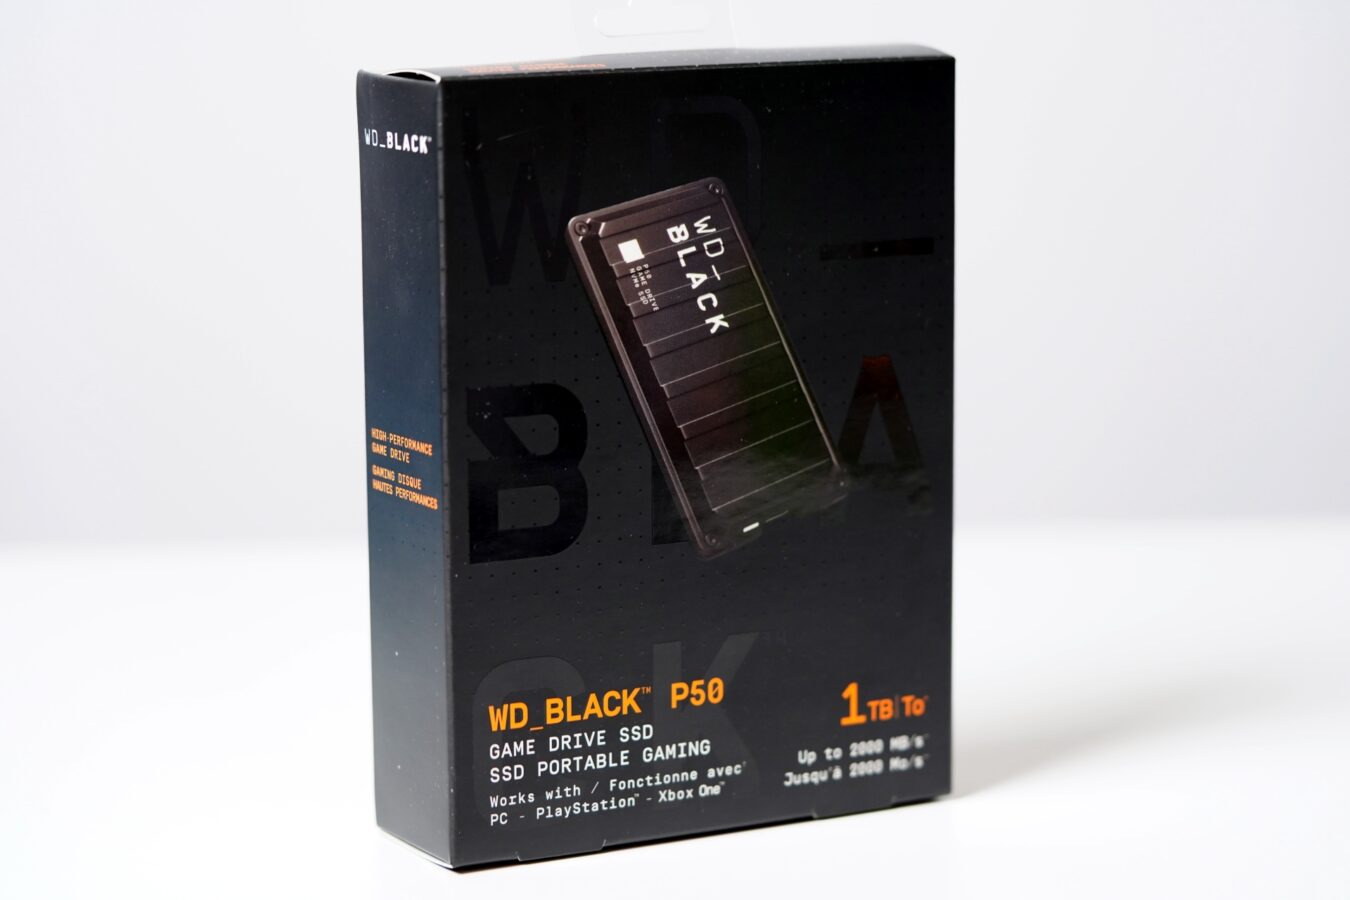 WD_BLACK P50 1 TB